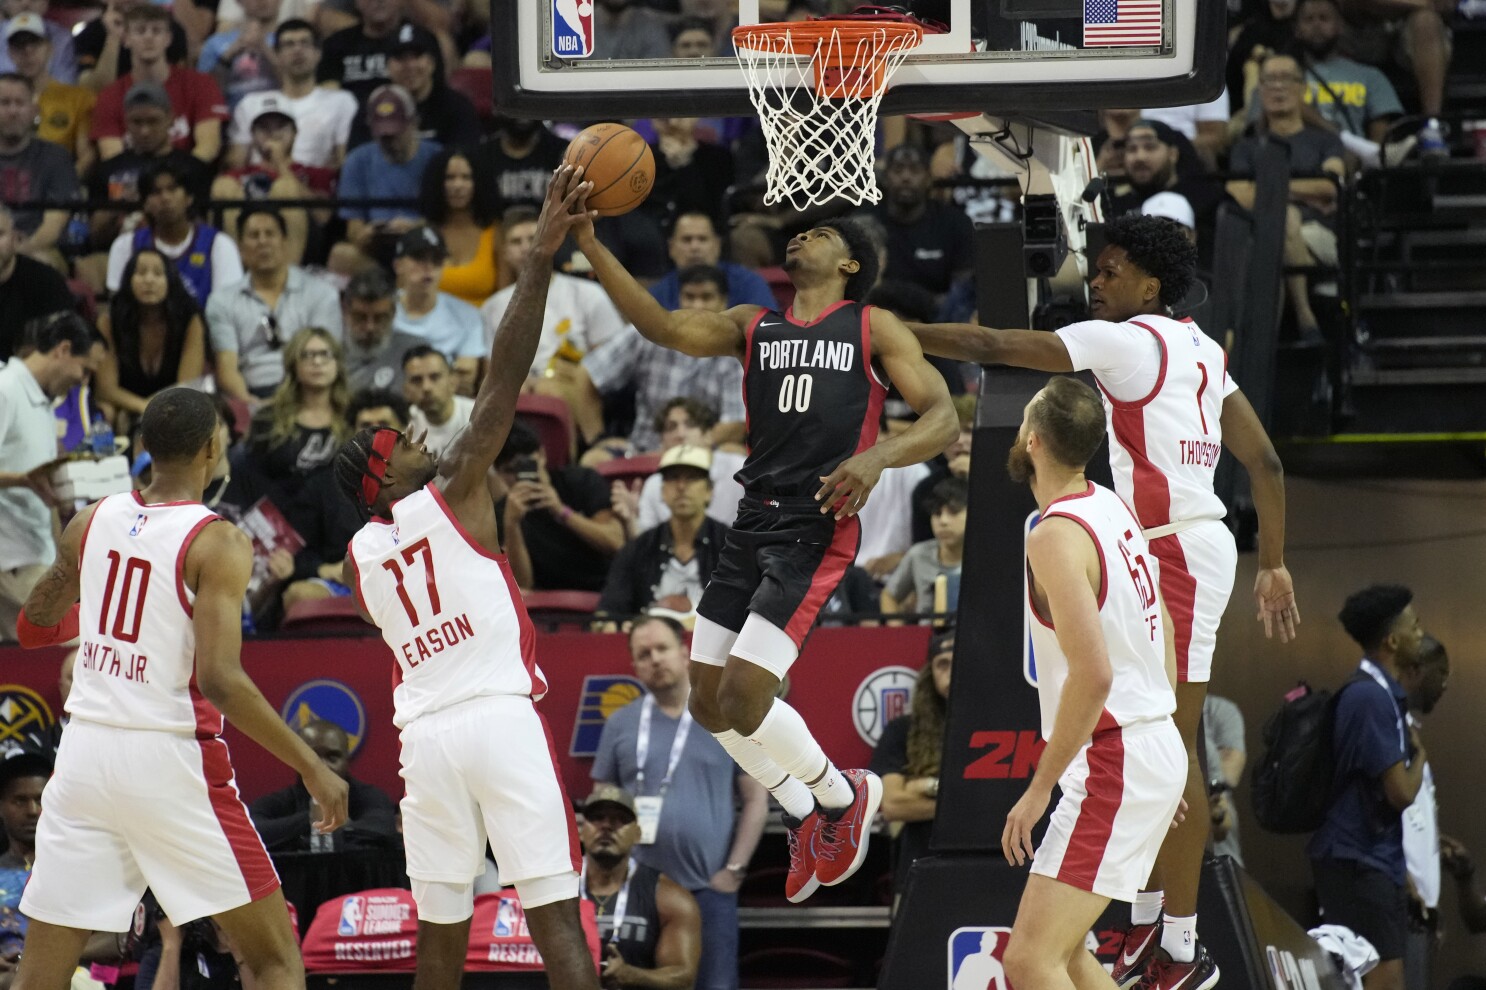 Houston Rockets take down San Antonio Spurs in summer league